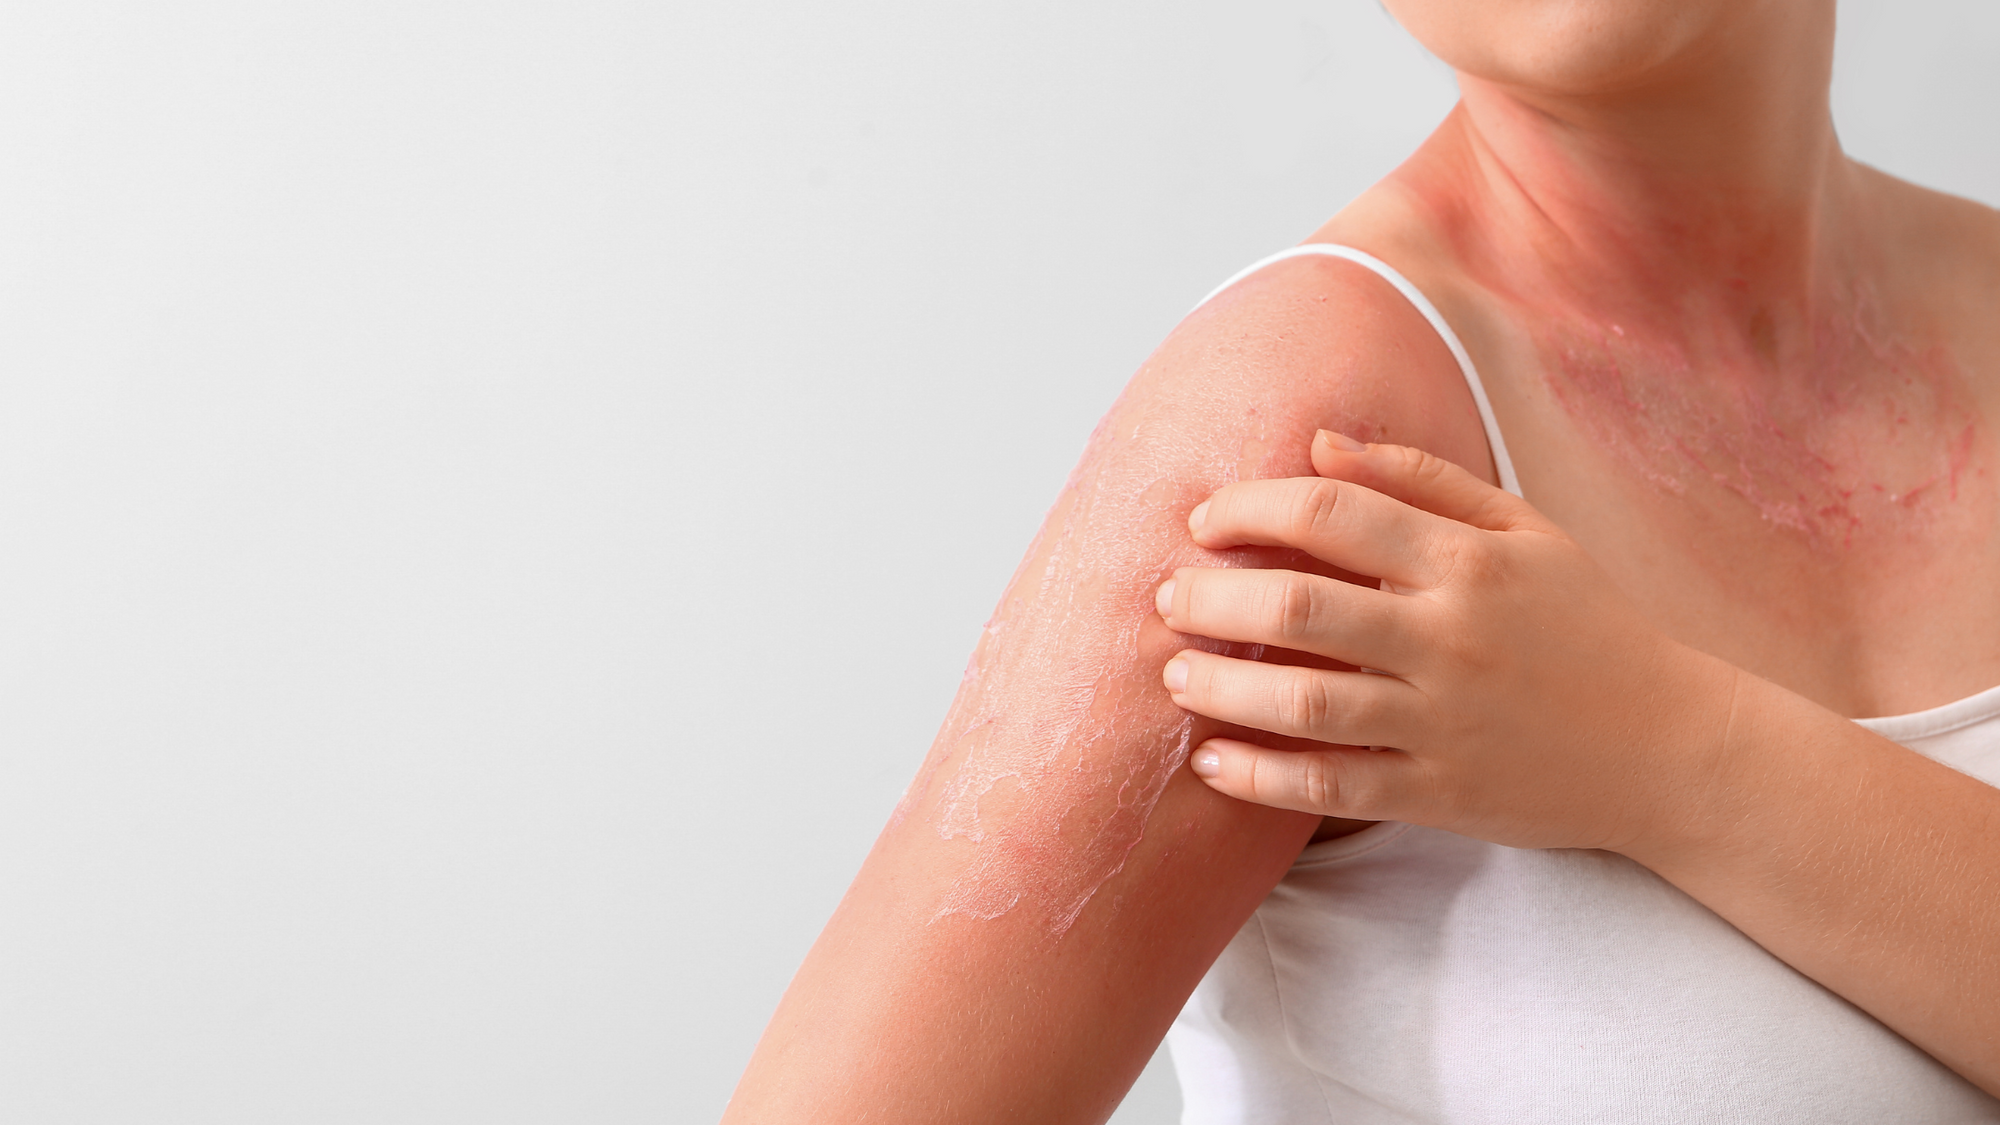 Why does skin peel after sunburn?